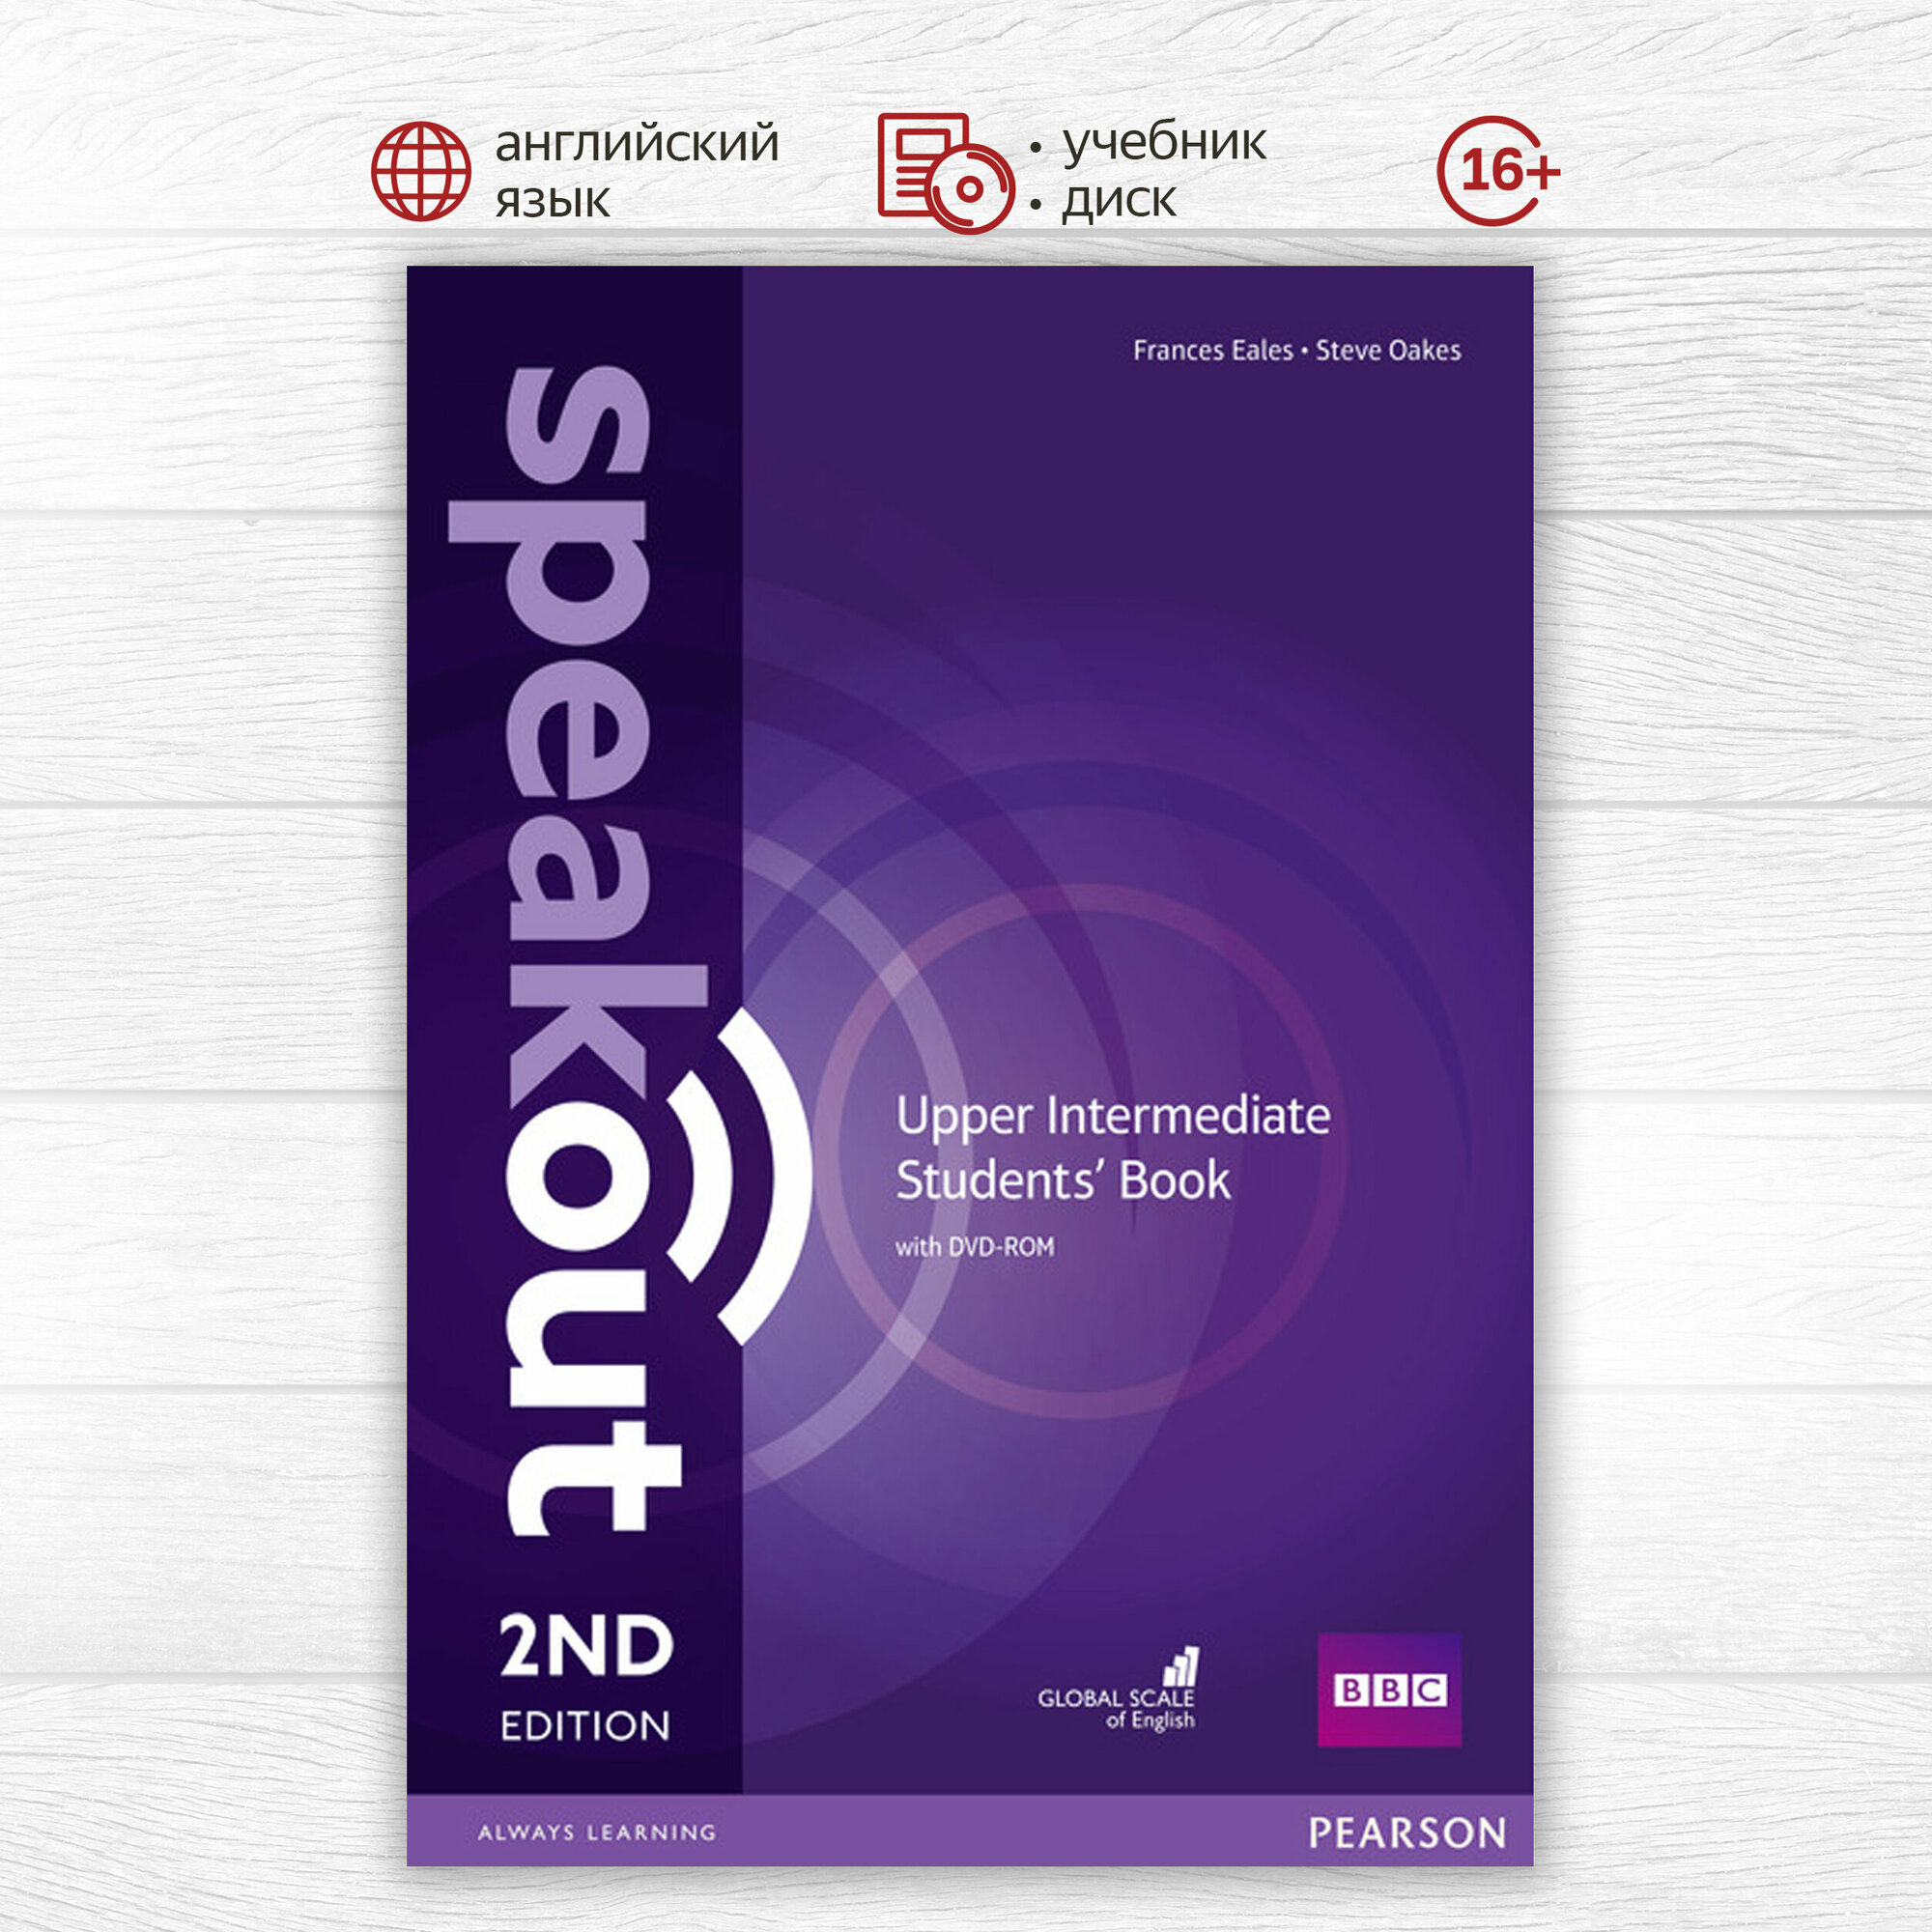 Speakout Second Edition Upper-Intermediate Student's Book and DVD-ROM, учебник по английскому языку для студентов и взрослых